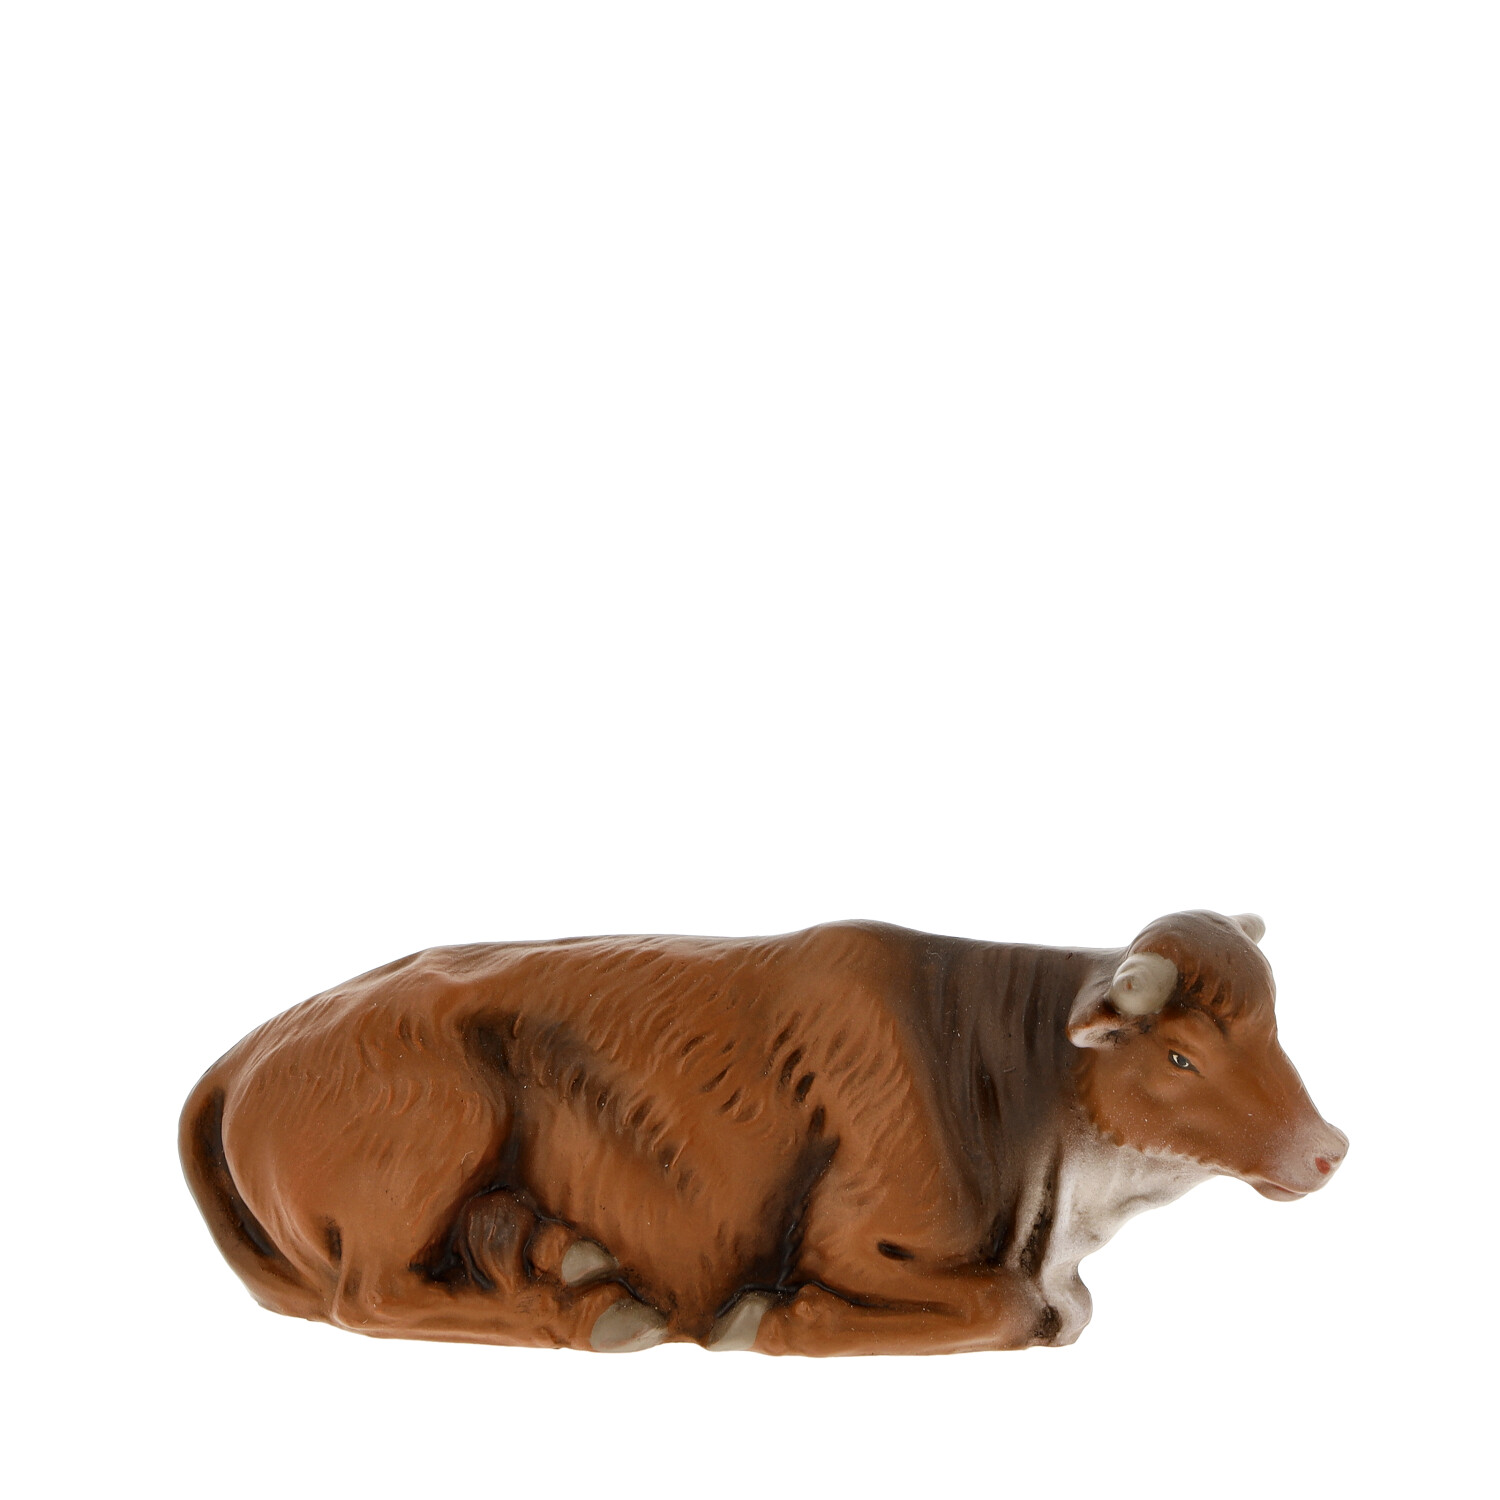 Lying ox - Marolin Nativity figure - made in Germany